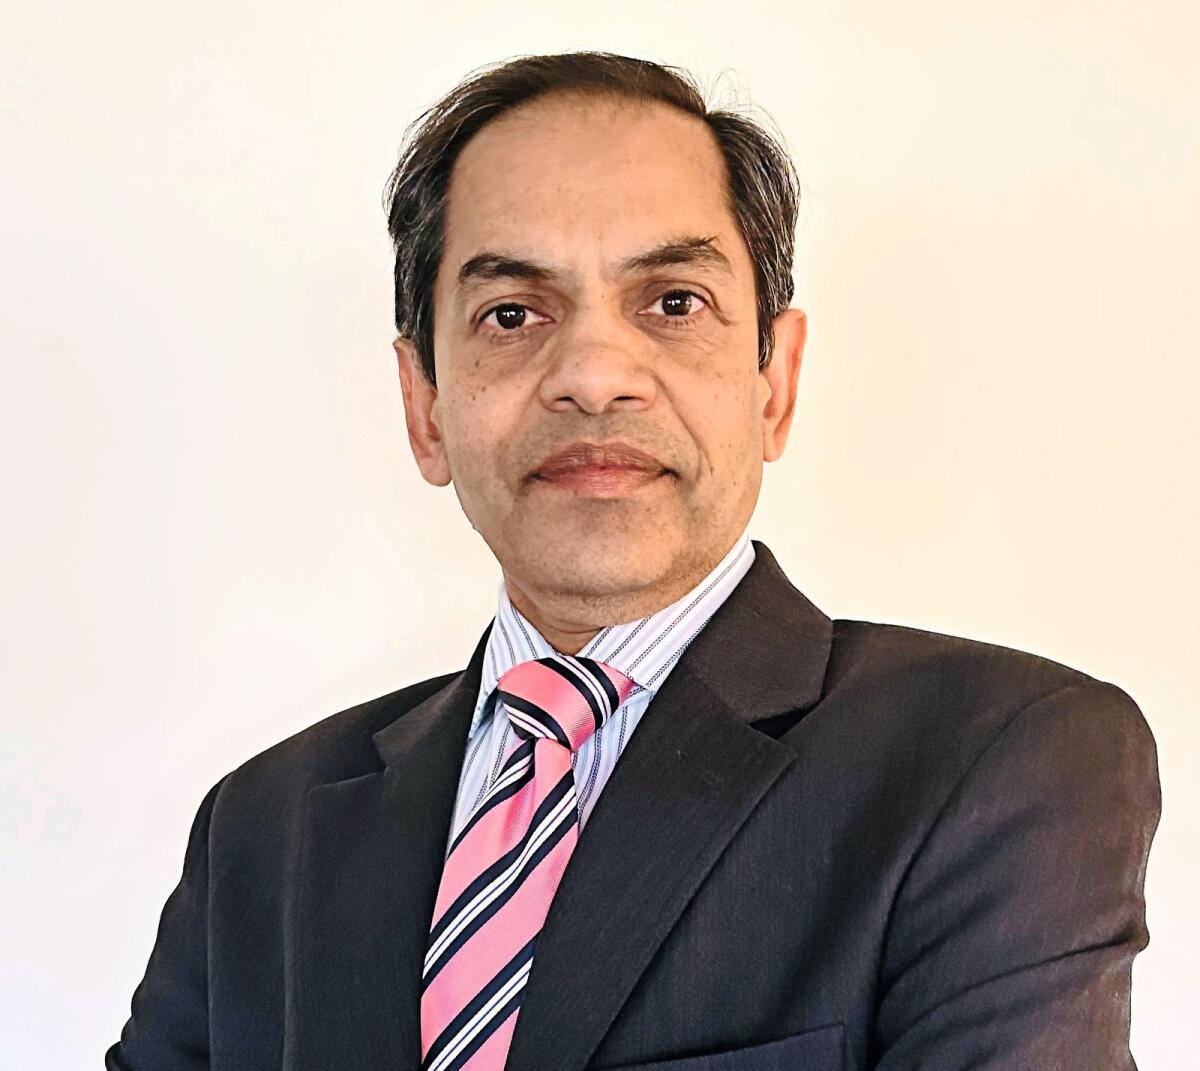 Sunjay Sudhir, India Ambassador to the UAE